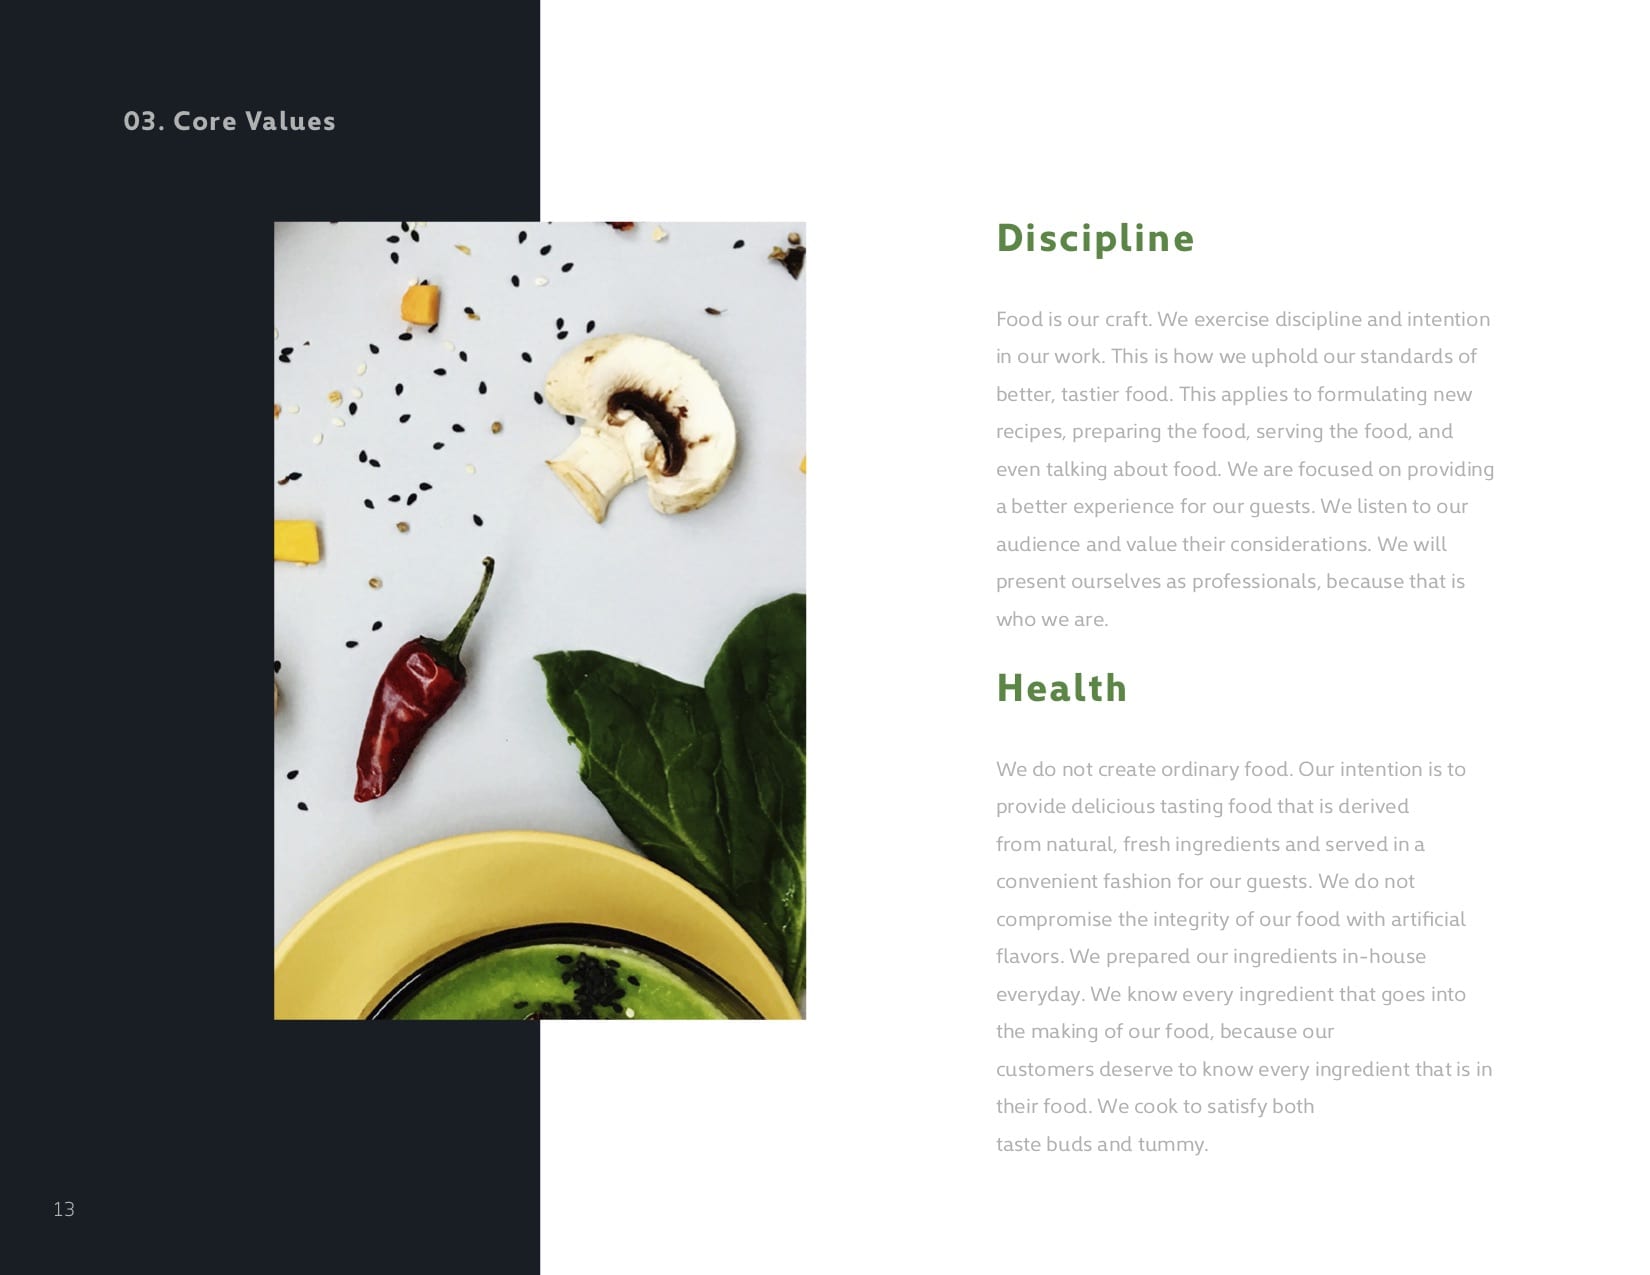 Buddha Bowl Fresh Kitchen Pembroke Pines Discipline and Health Core Values webpage